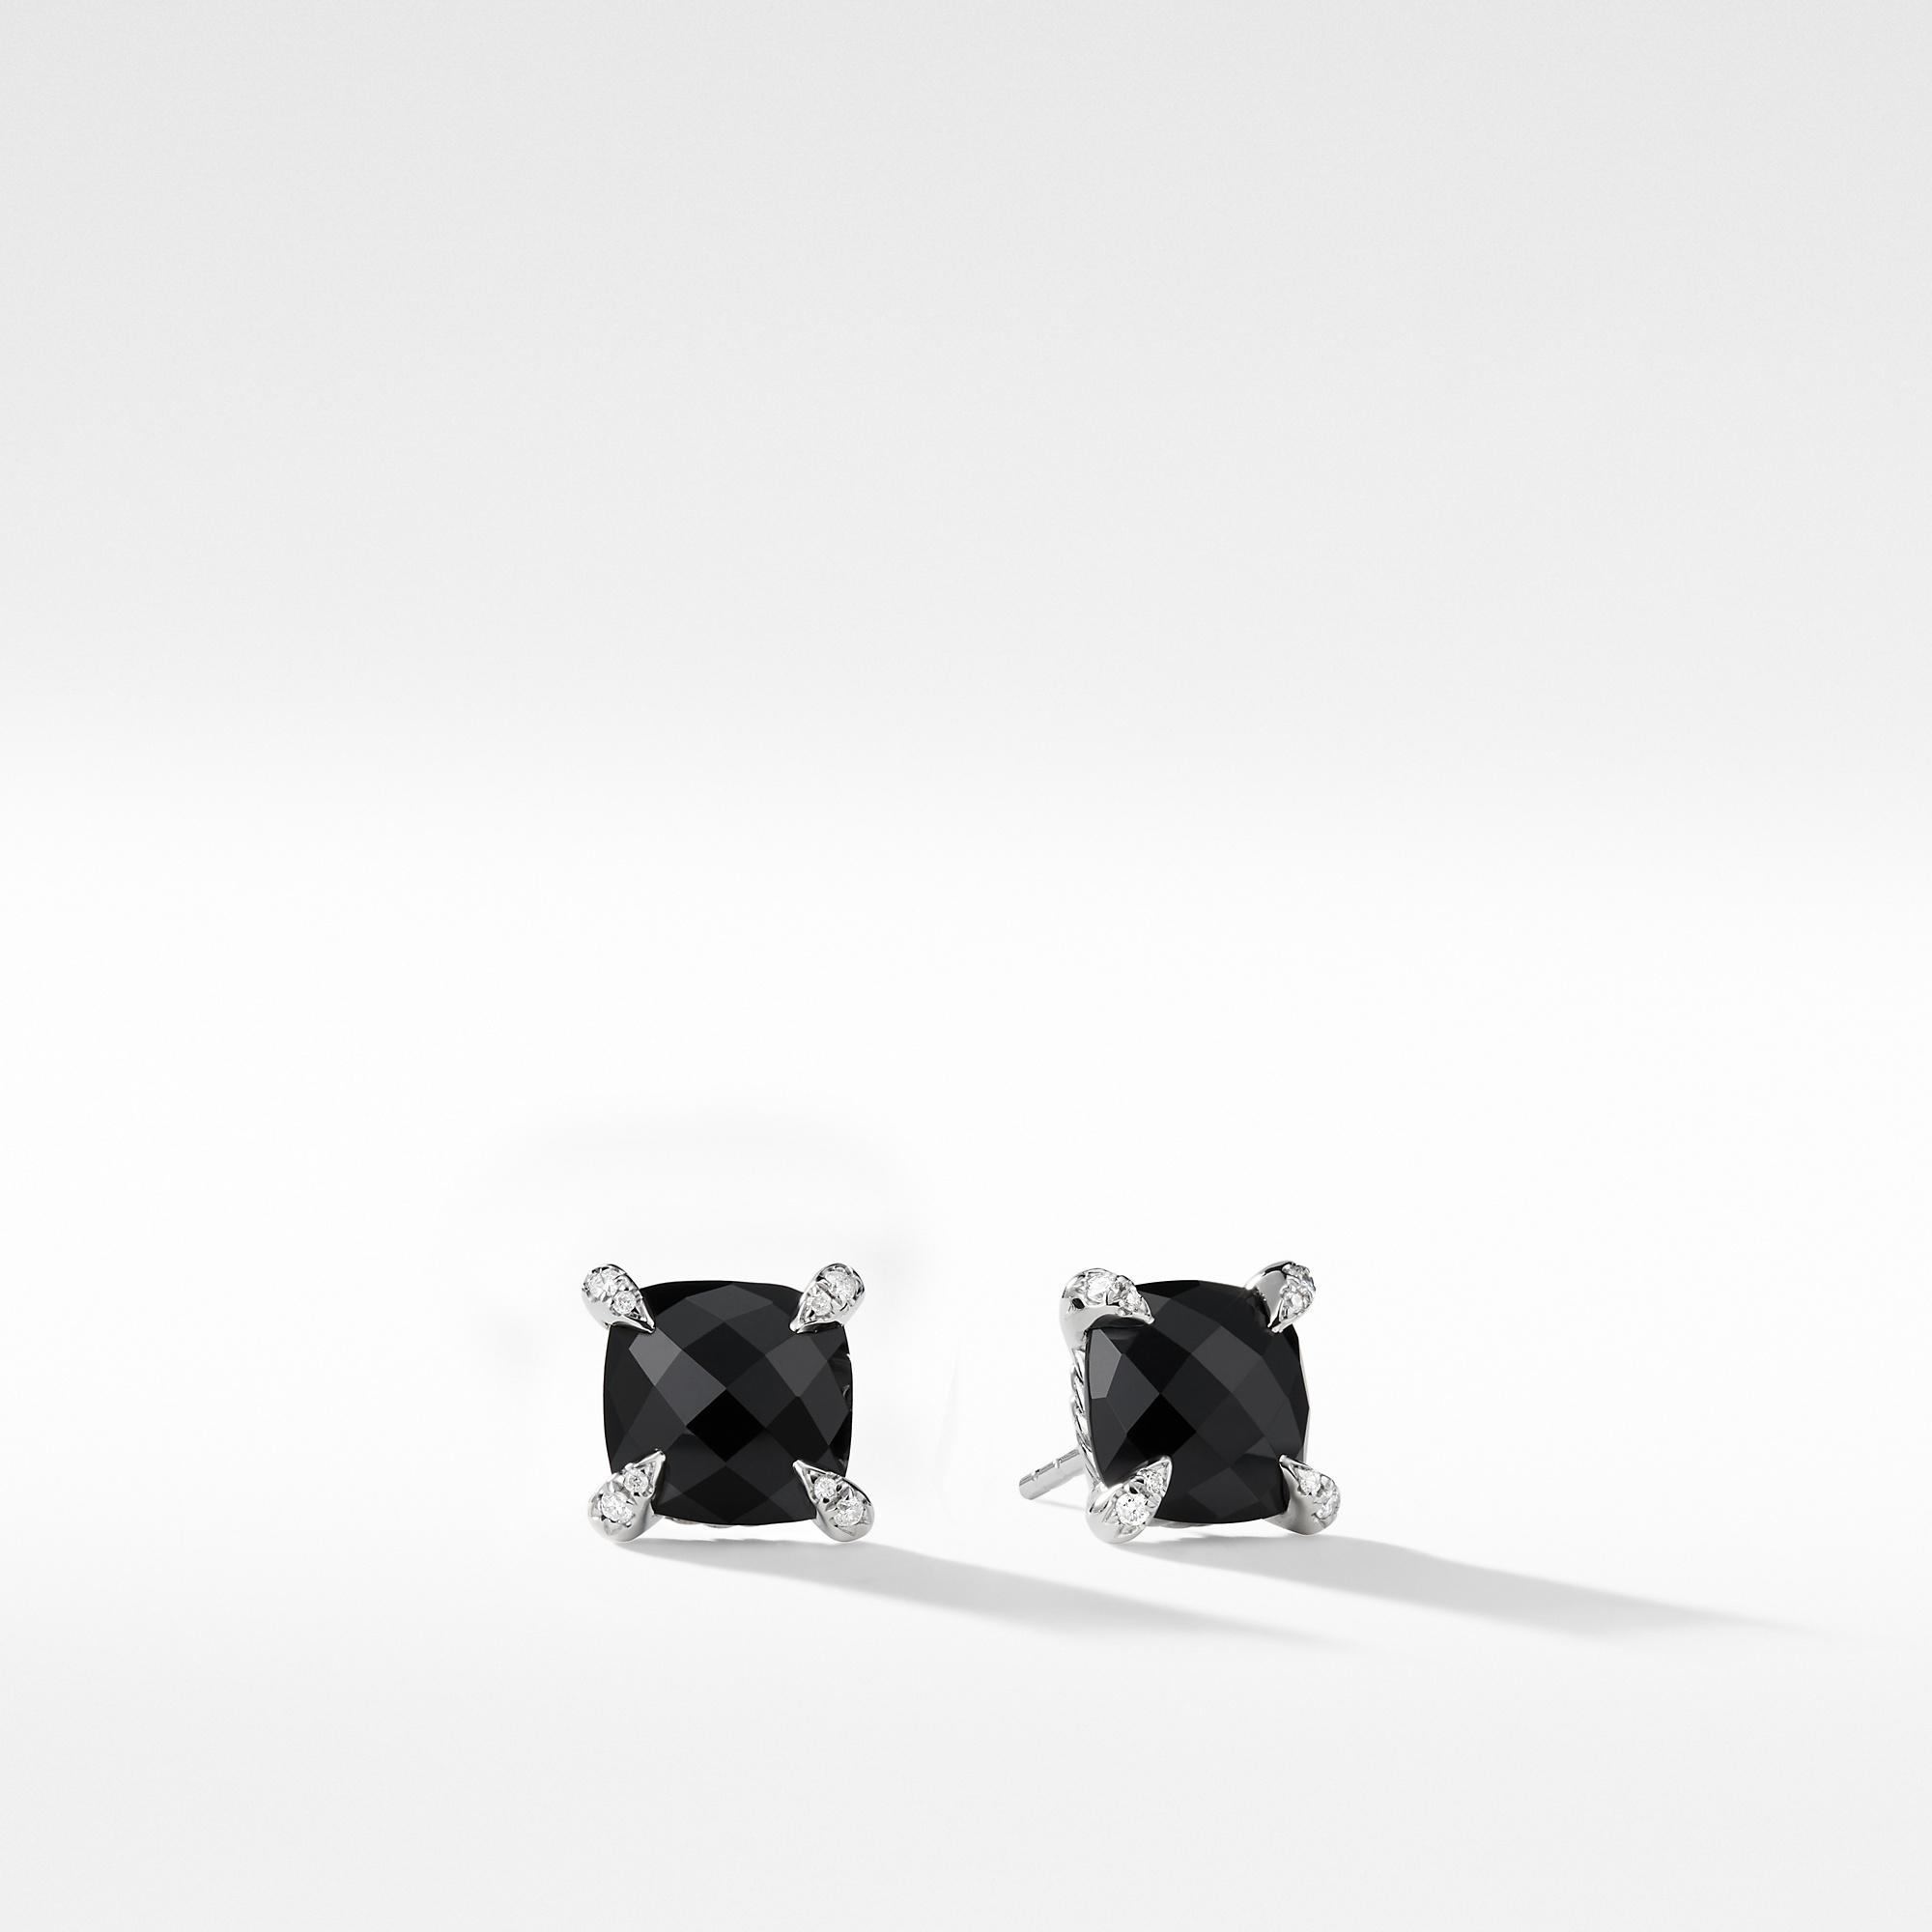 David Yurman Chatelaine Stud Earrings with Black Onyx and Diamonds, 9mm